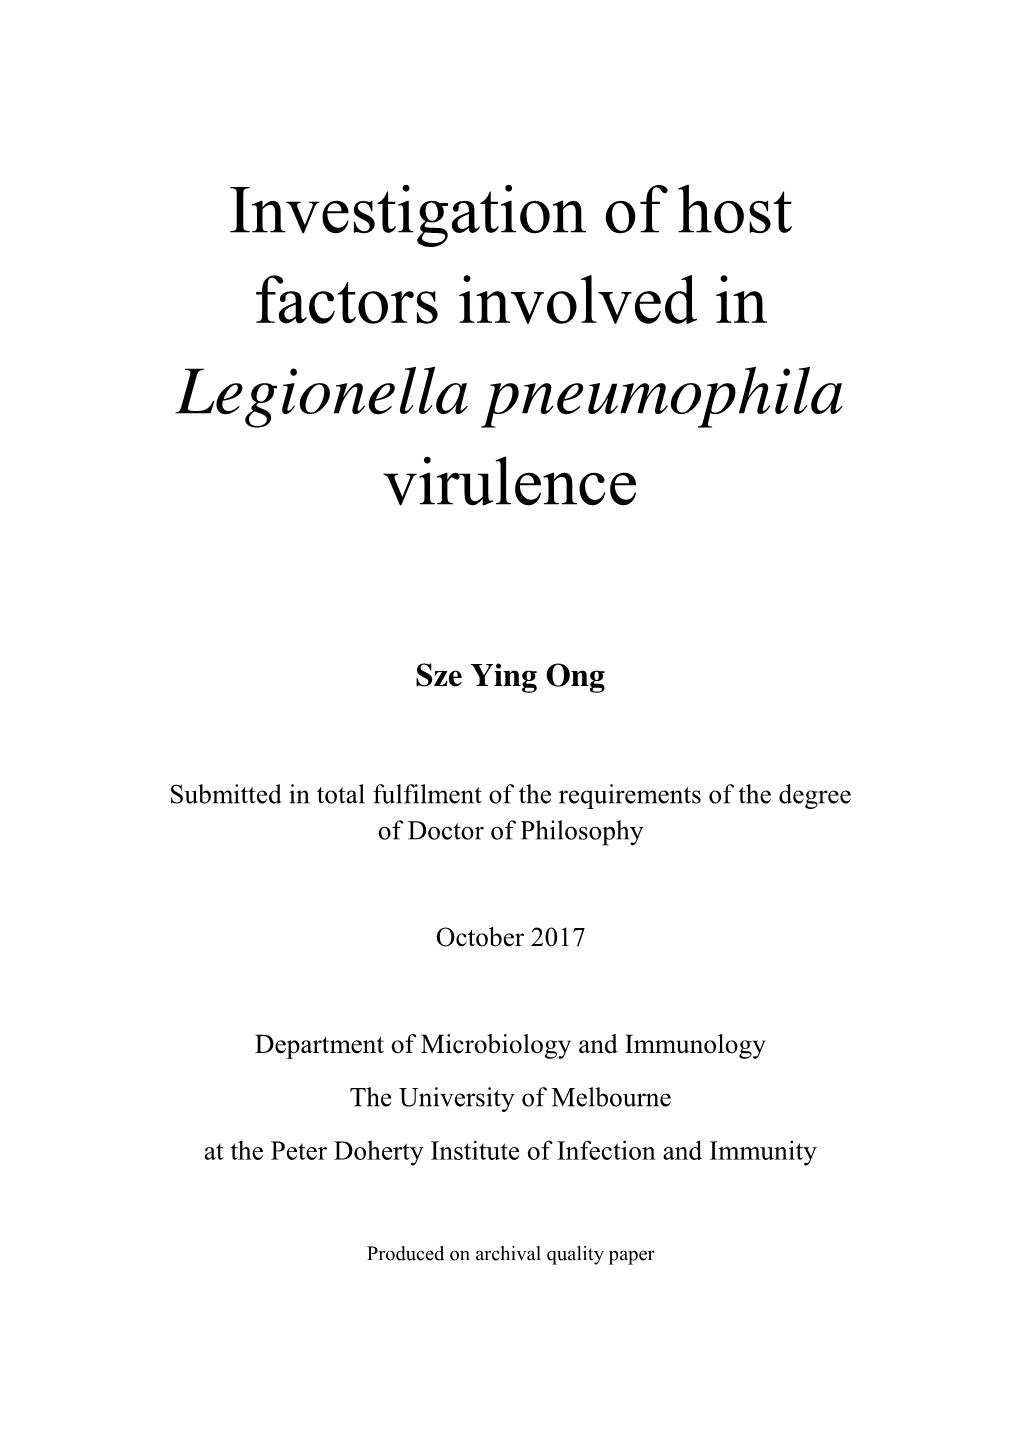 Investigation of Host Factors Involved in Legionella Pneumophila Virulence